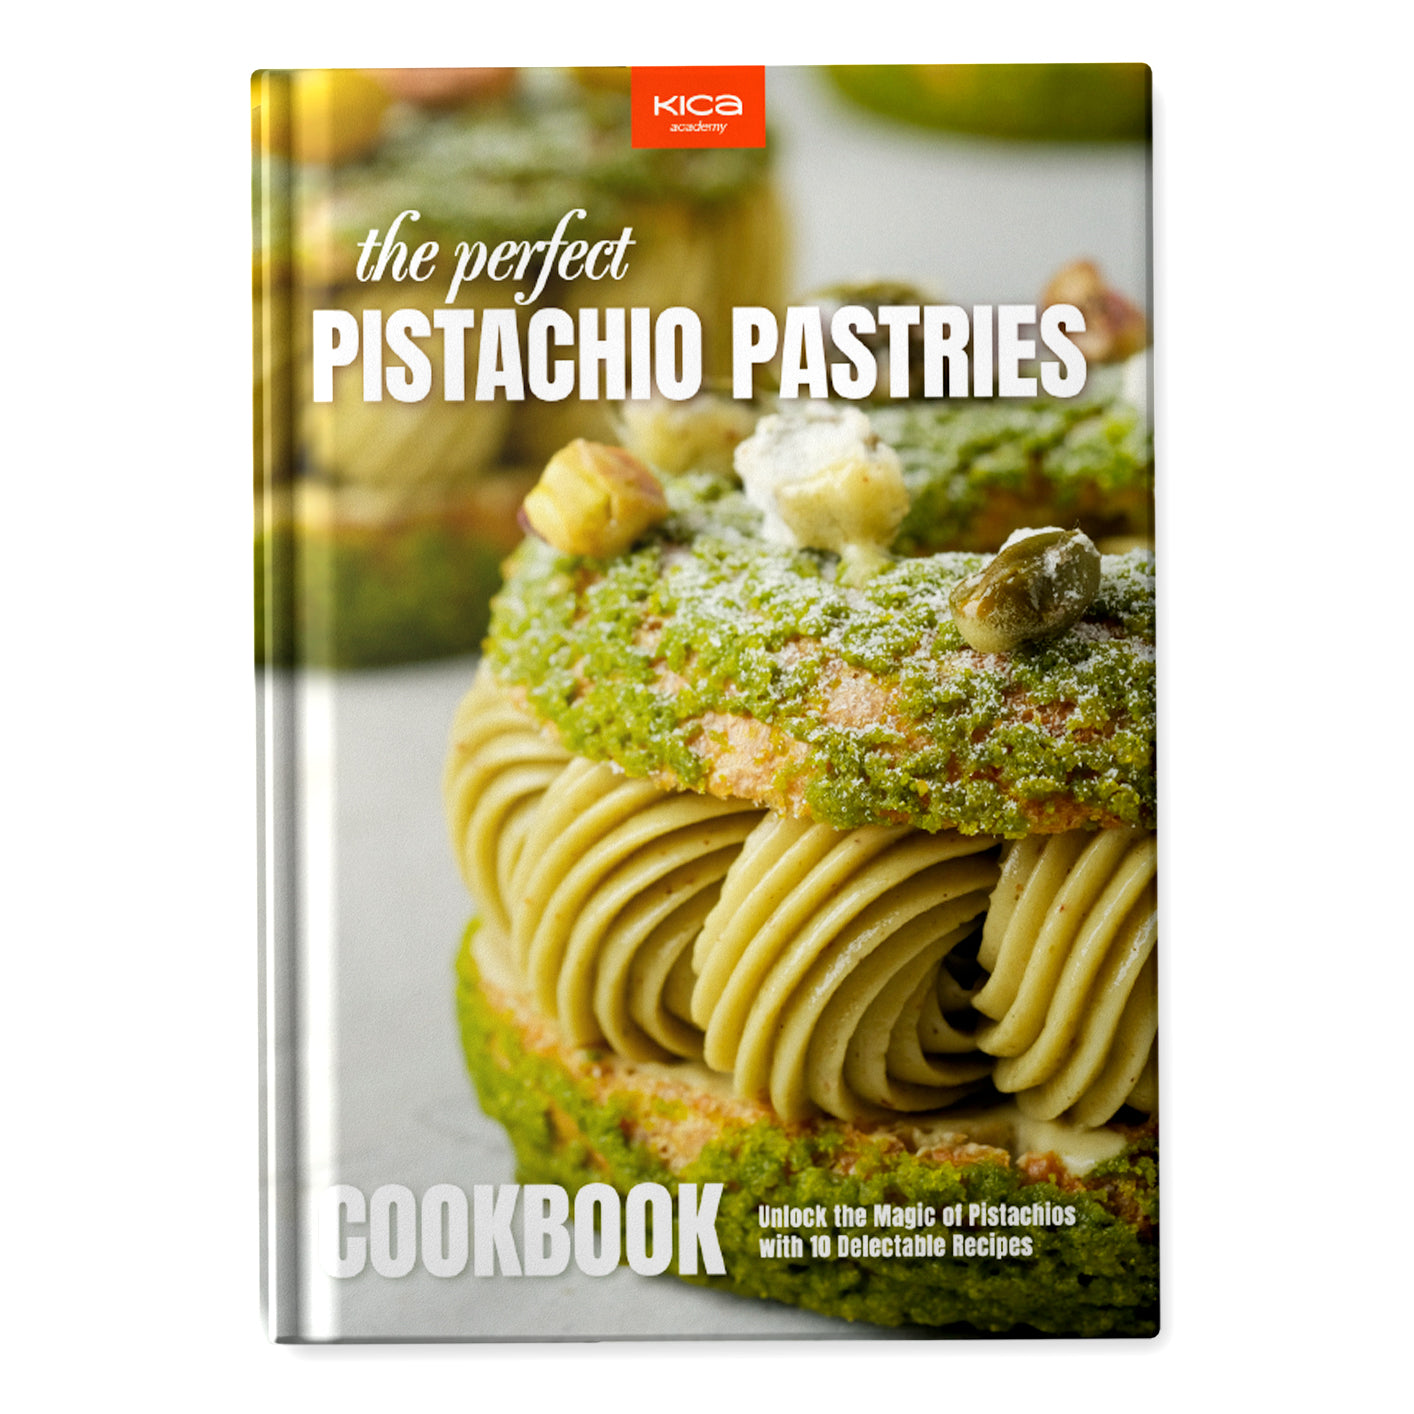 The Perfect Pistachio Pastries Cookbook